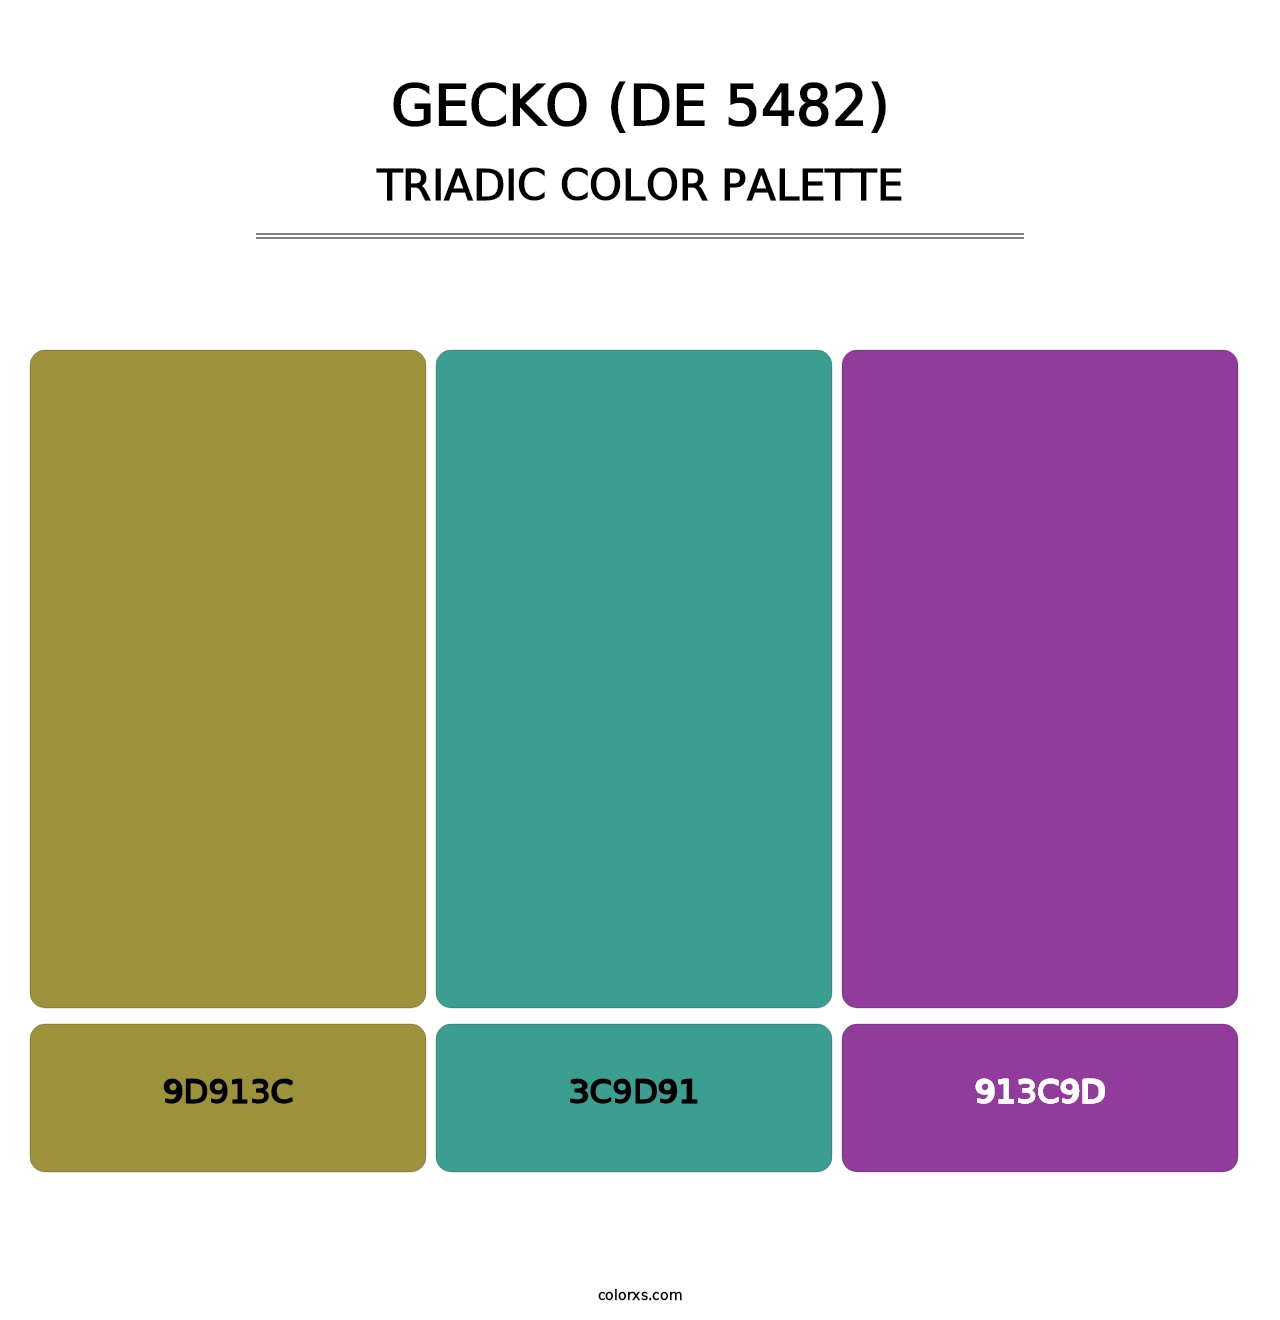 Gecko (DE 5482) - Triadic Color Palette